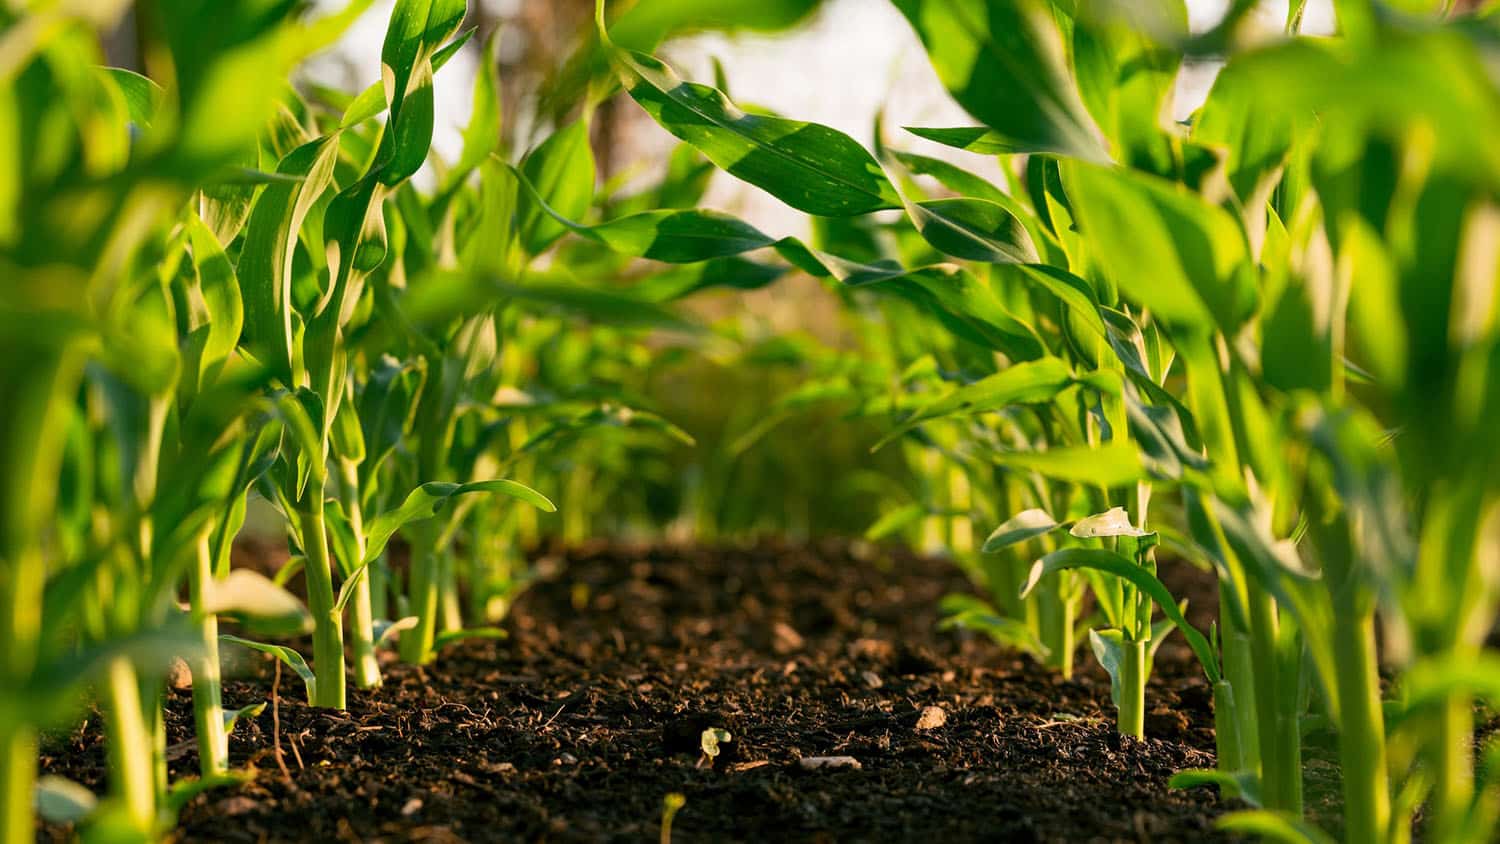 sunlight shines through young corn plants onto dark soil